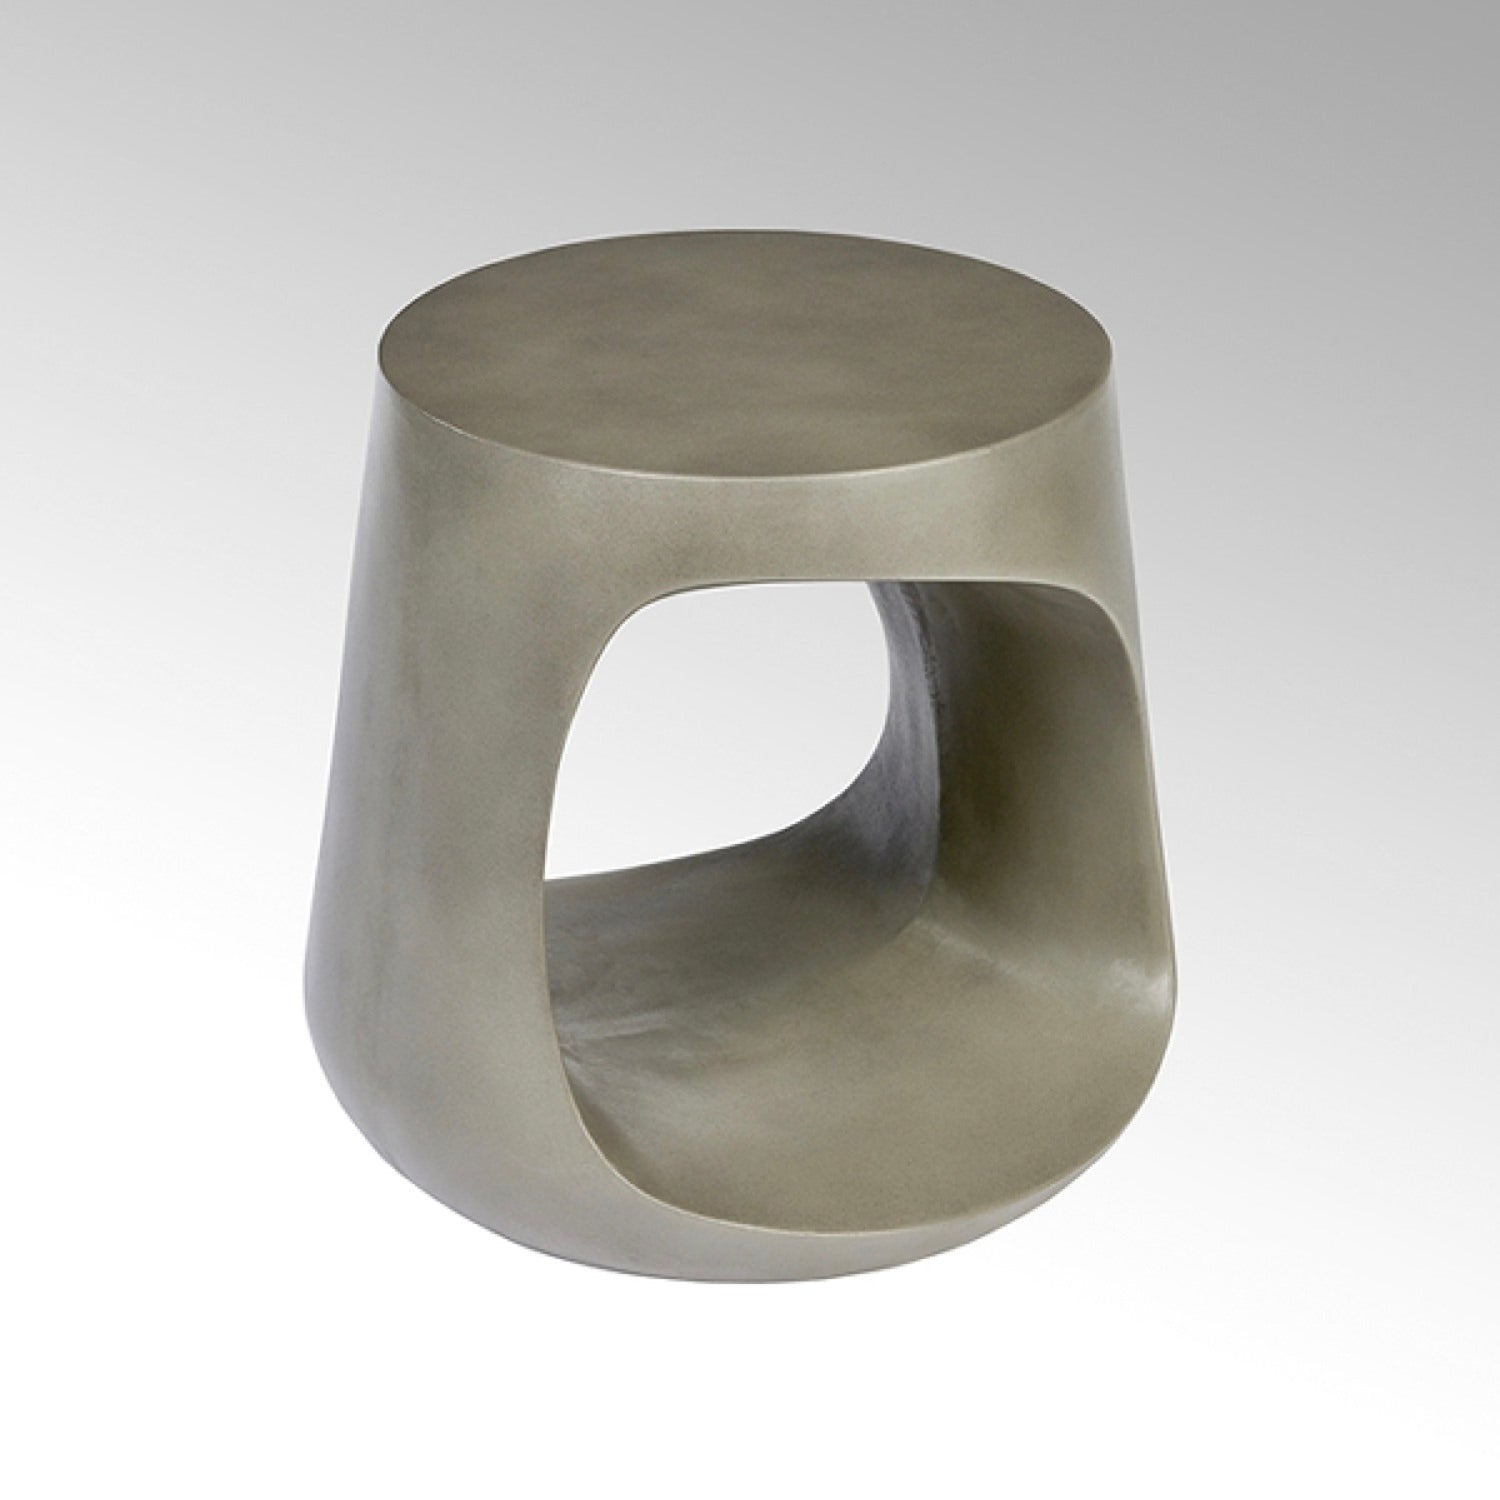 Lambert MOORE concrete table object